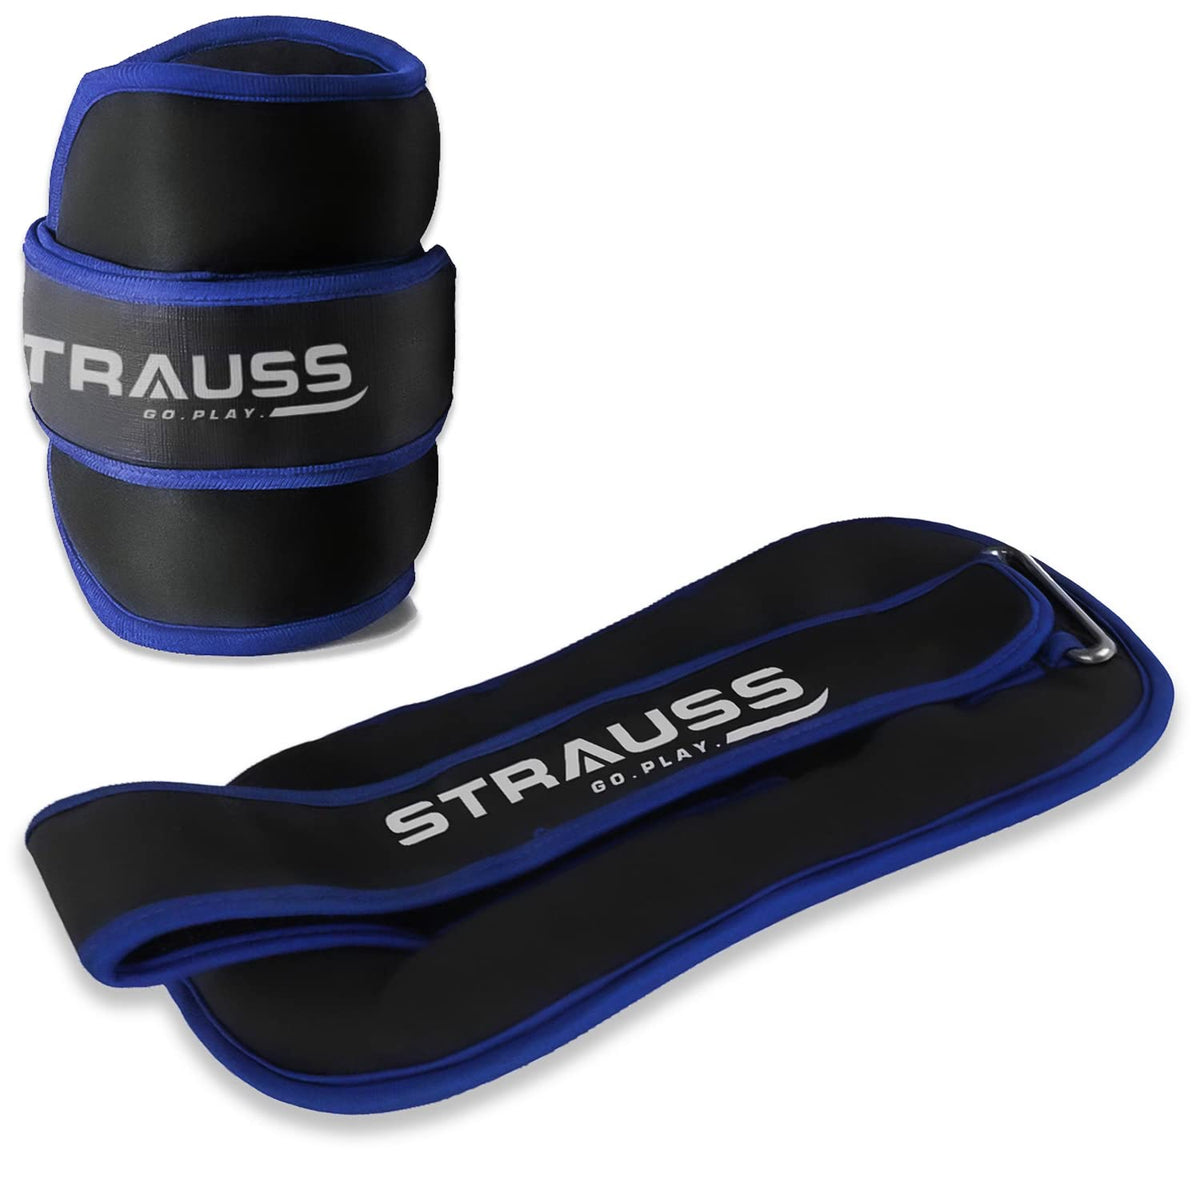 Strauss Round Shape Ankle Weight, 1 Kg (Each), Pair, (Blue)